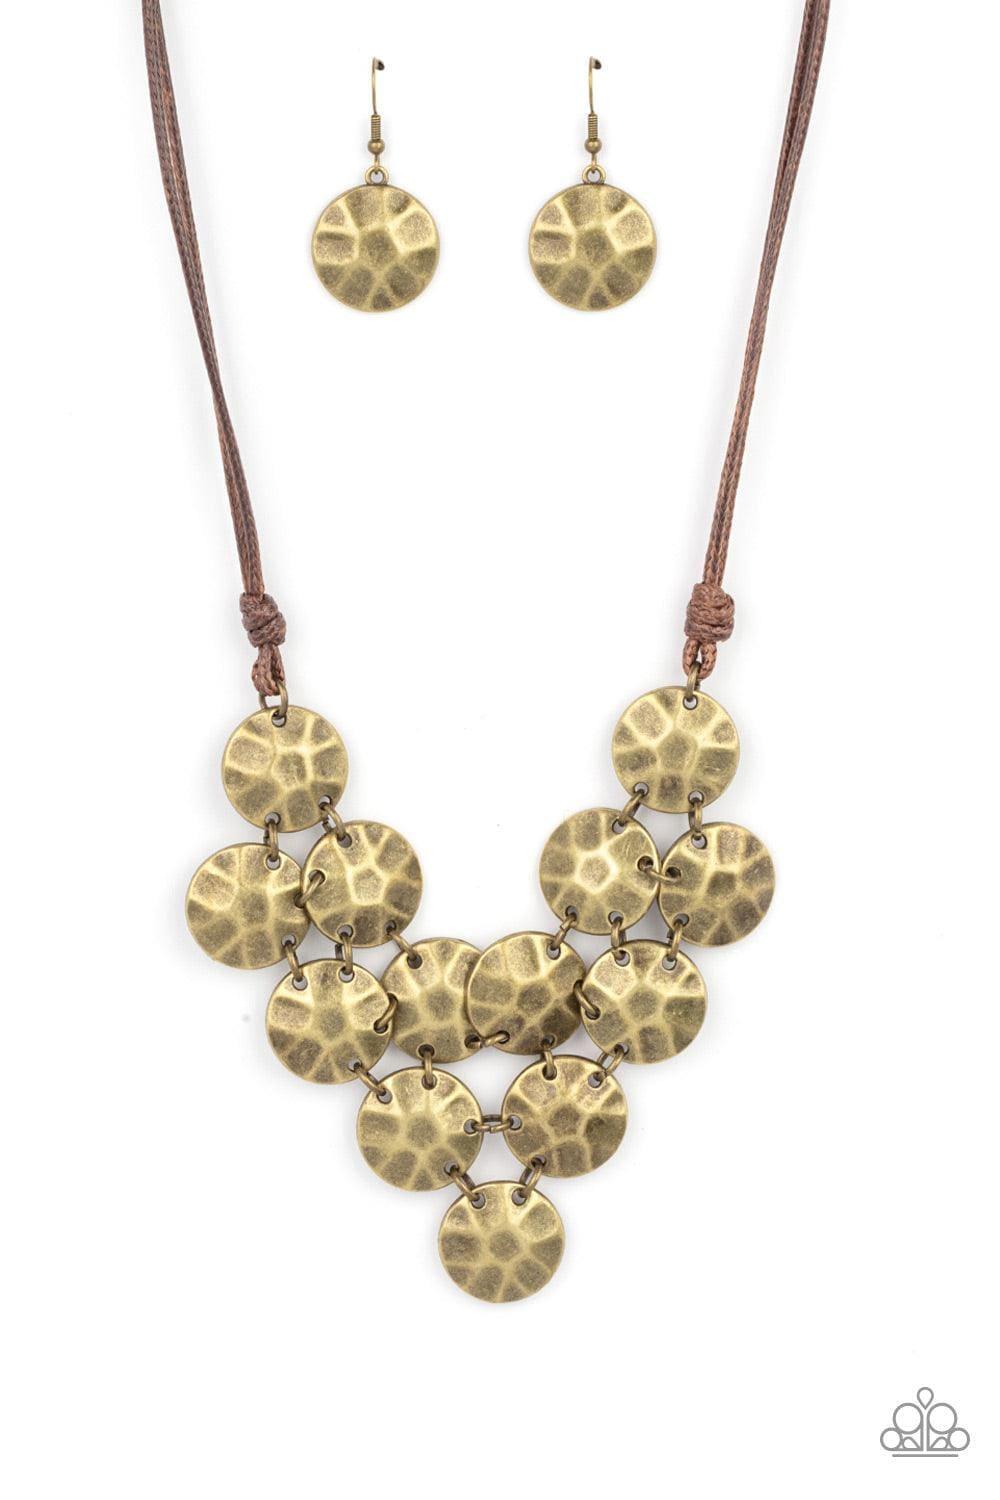 Paparazzi Accessories - Token Treasure - Brass Necklace - Bling by JessieK